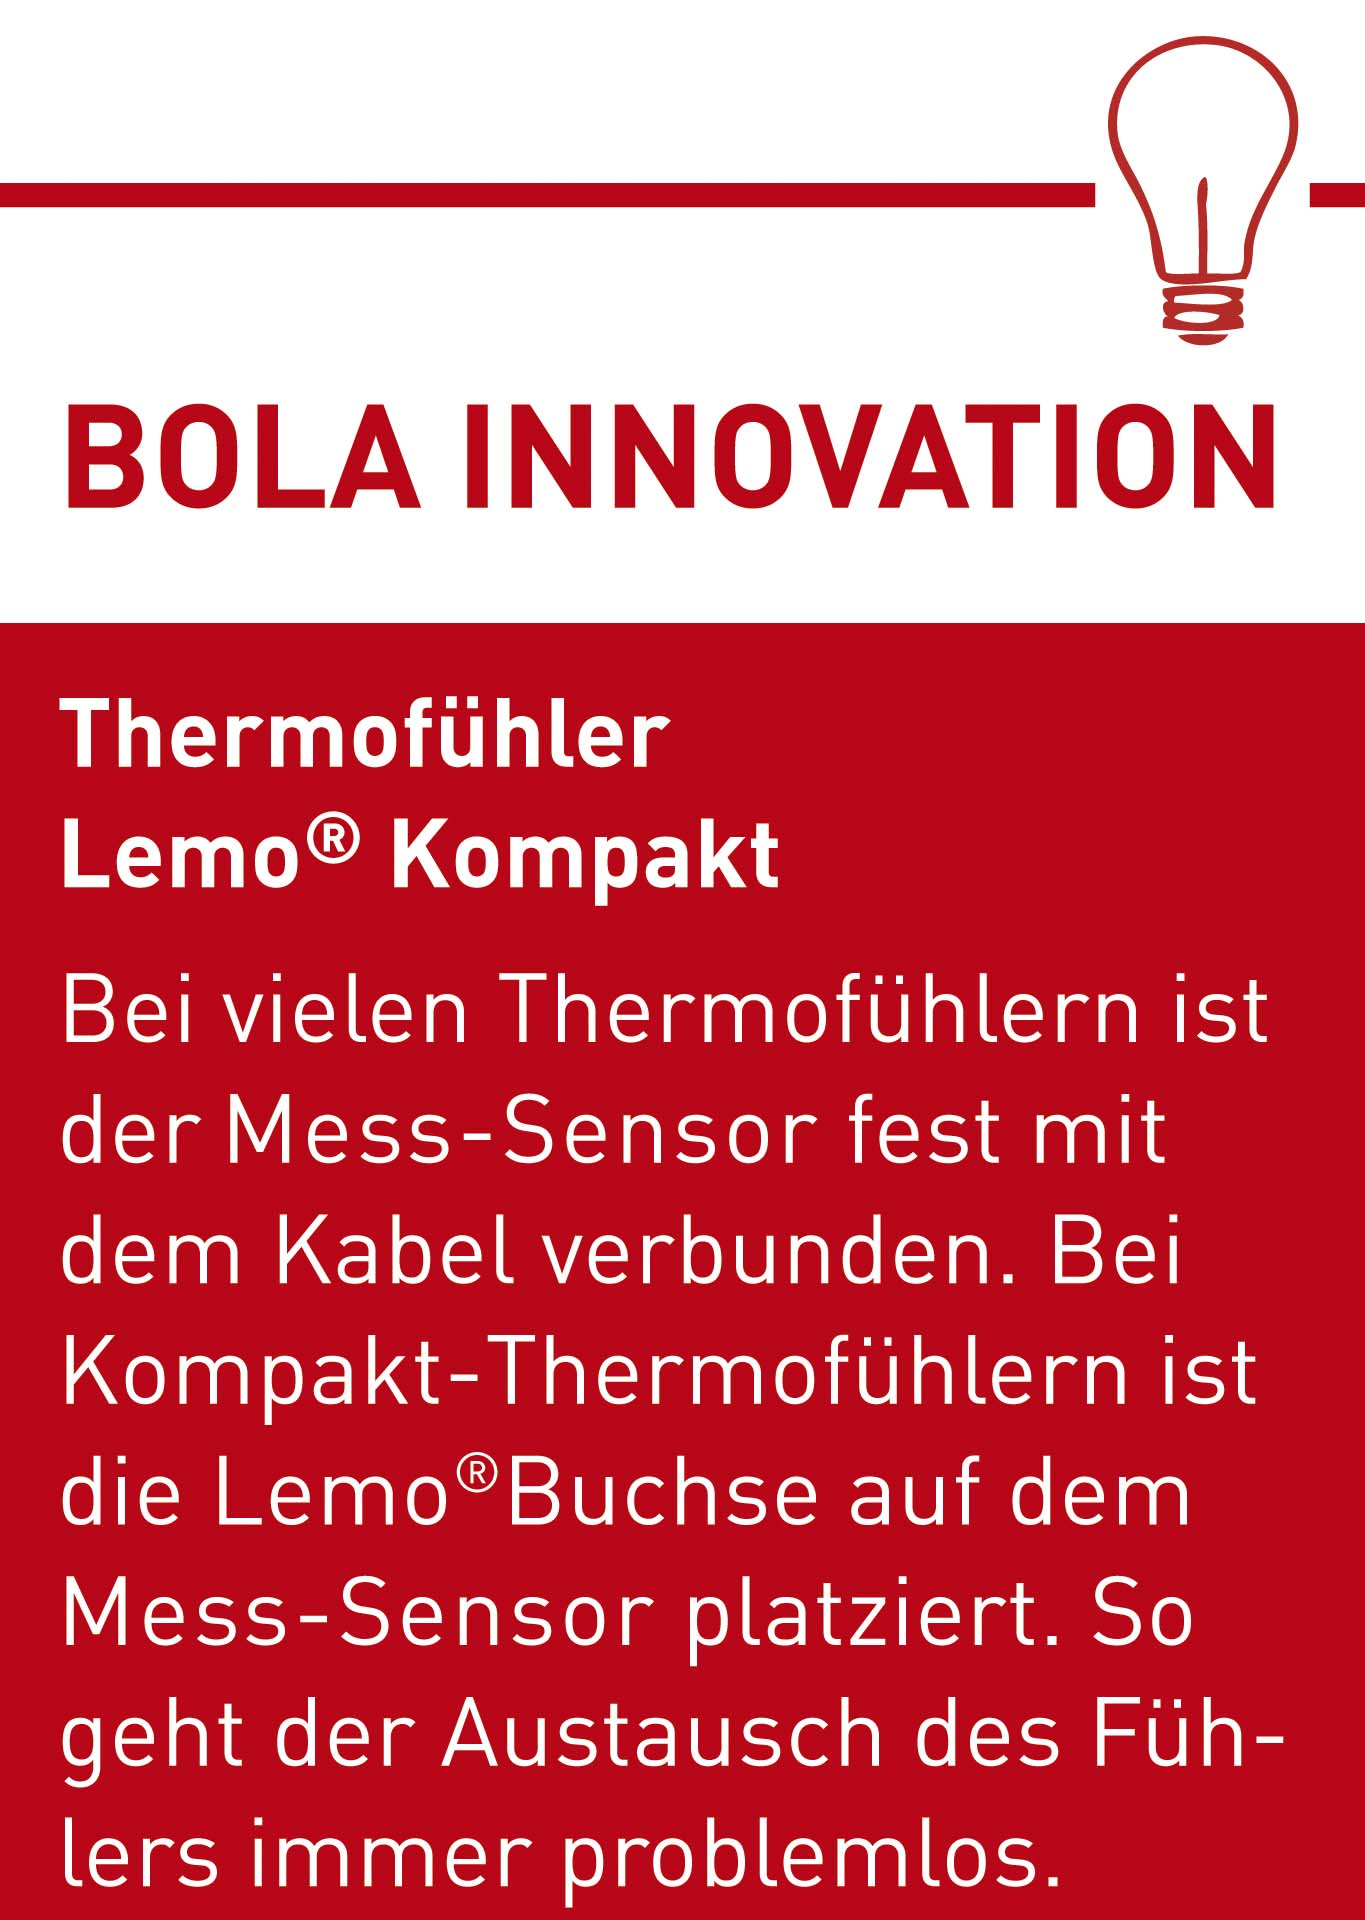 BOLA Innovation Thermofuehler kompakt D.jpg